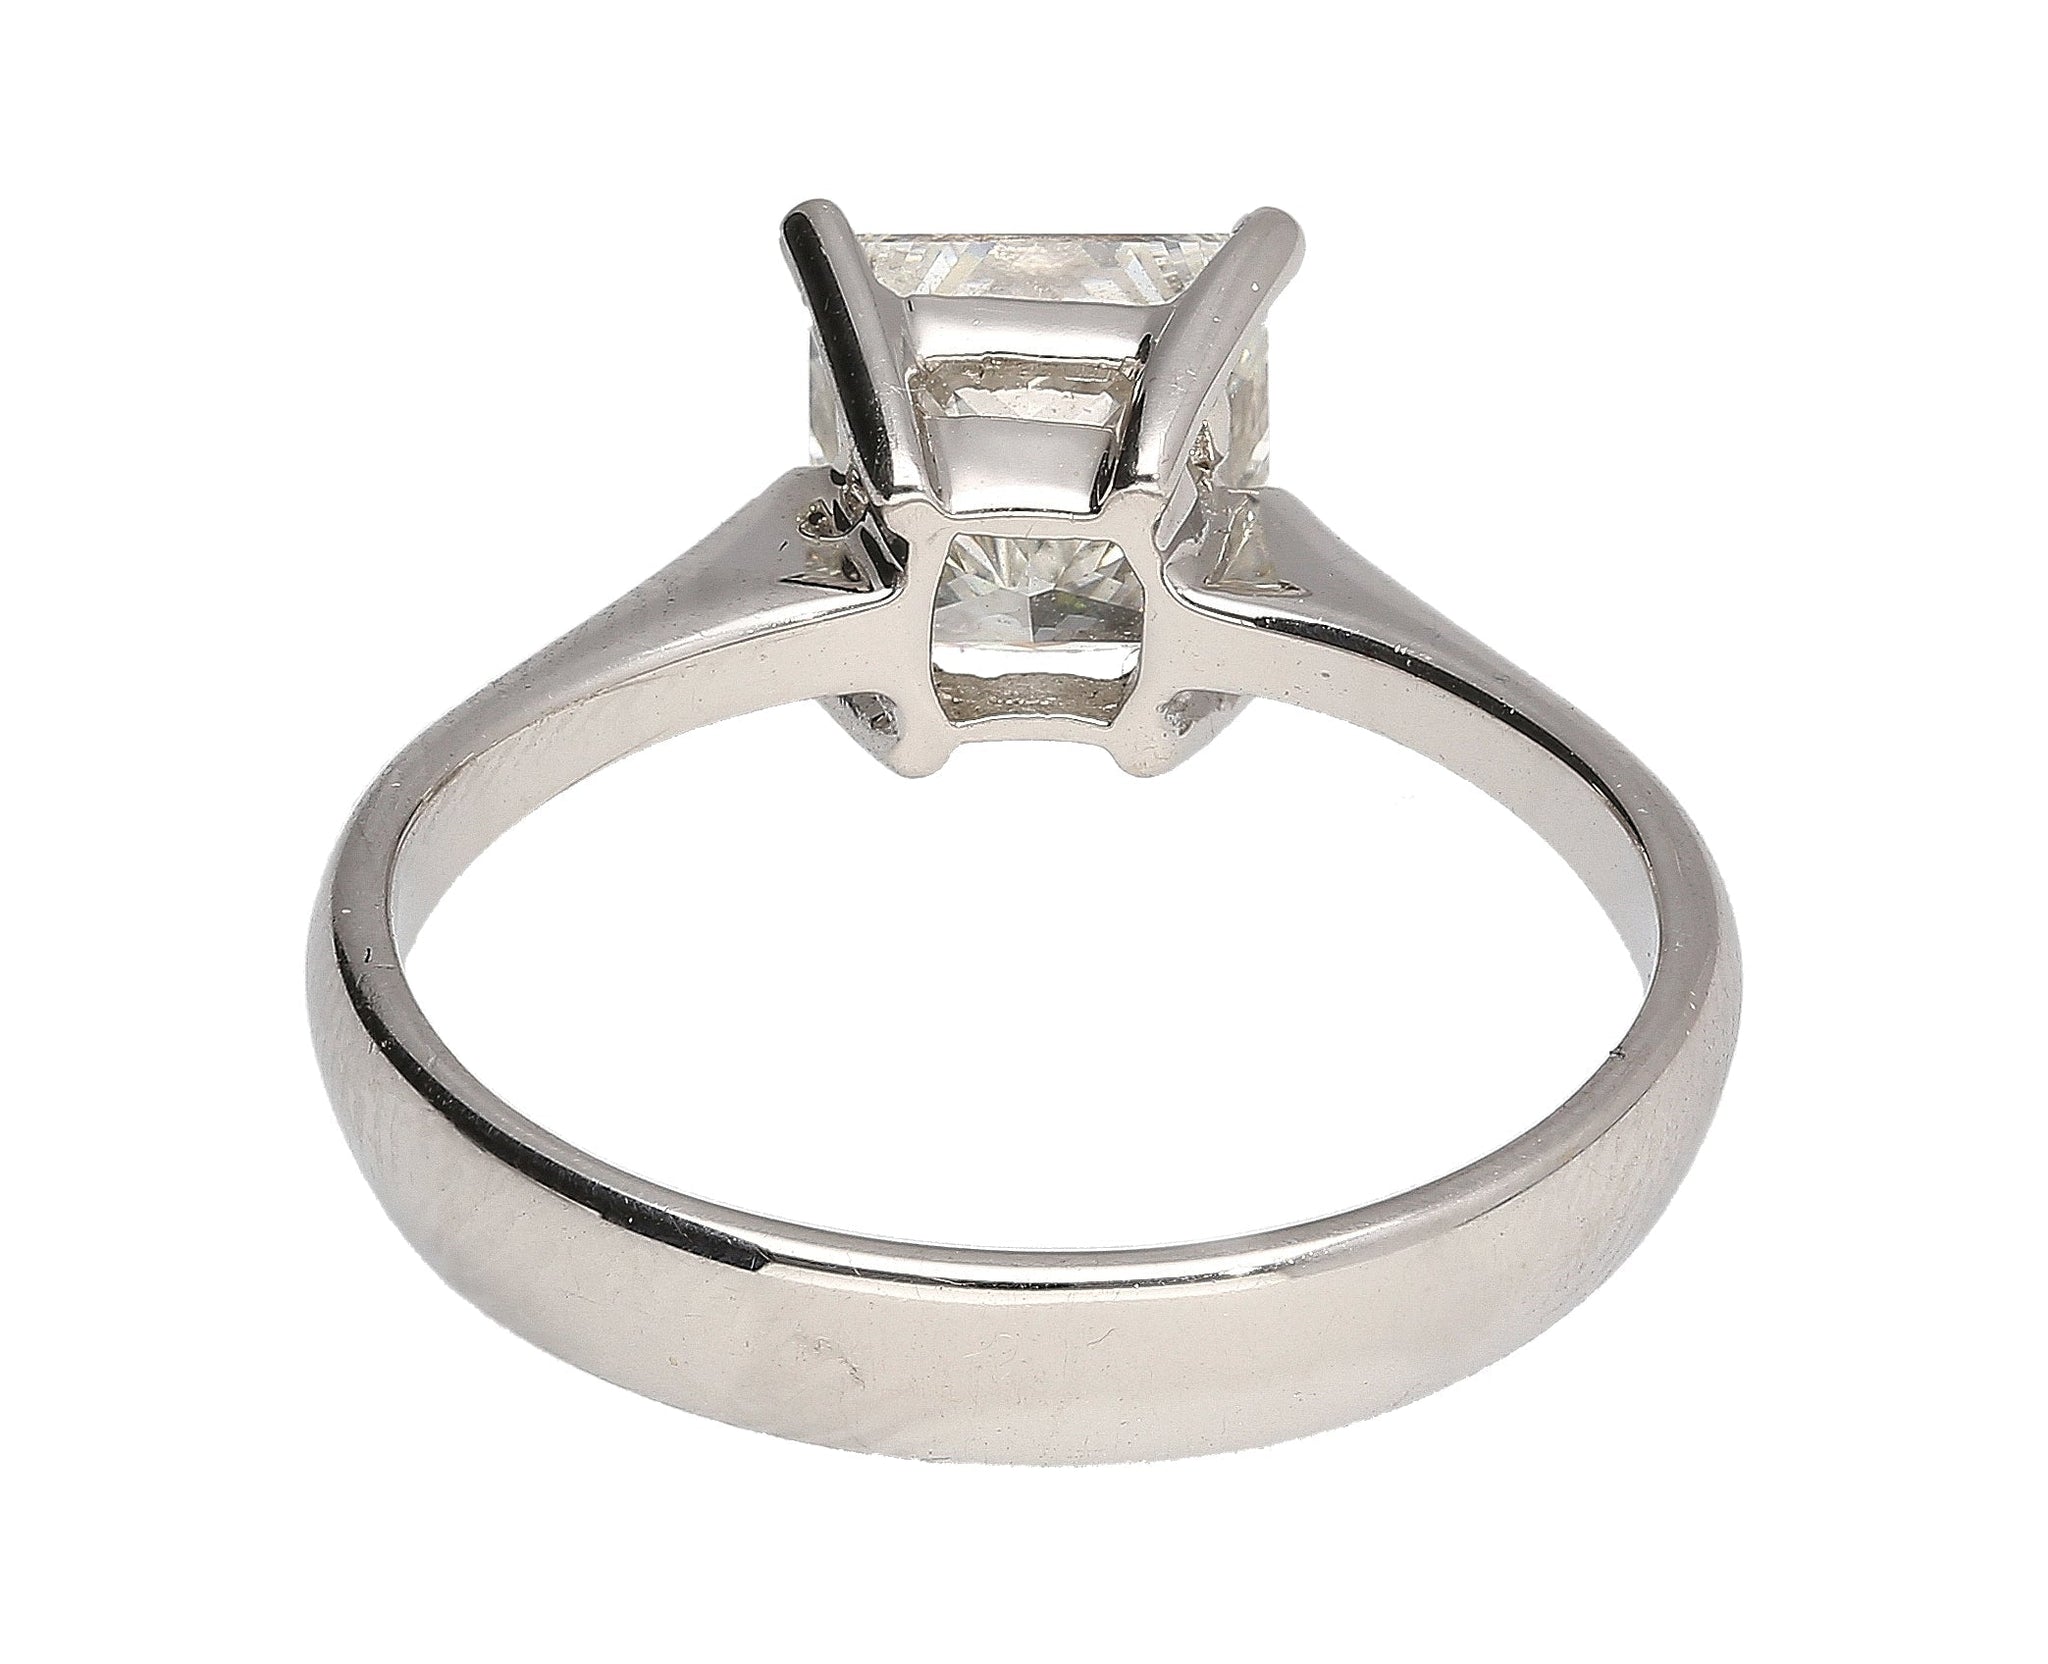 GIA Certified 1.64 Carat Princess Cut Diamond In Tiffany Setting 18K White Gold Ring